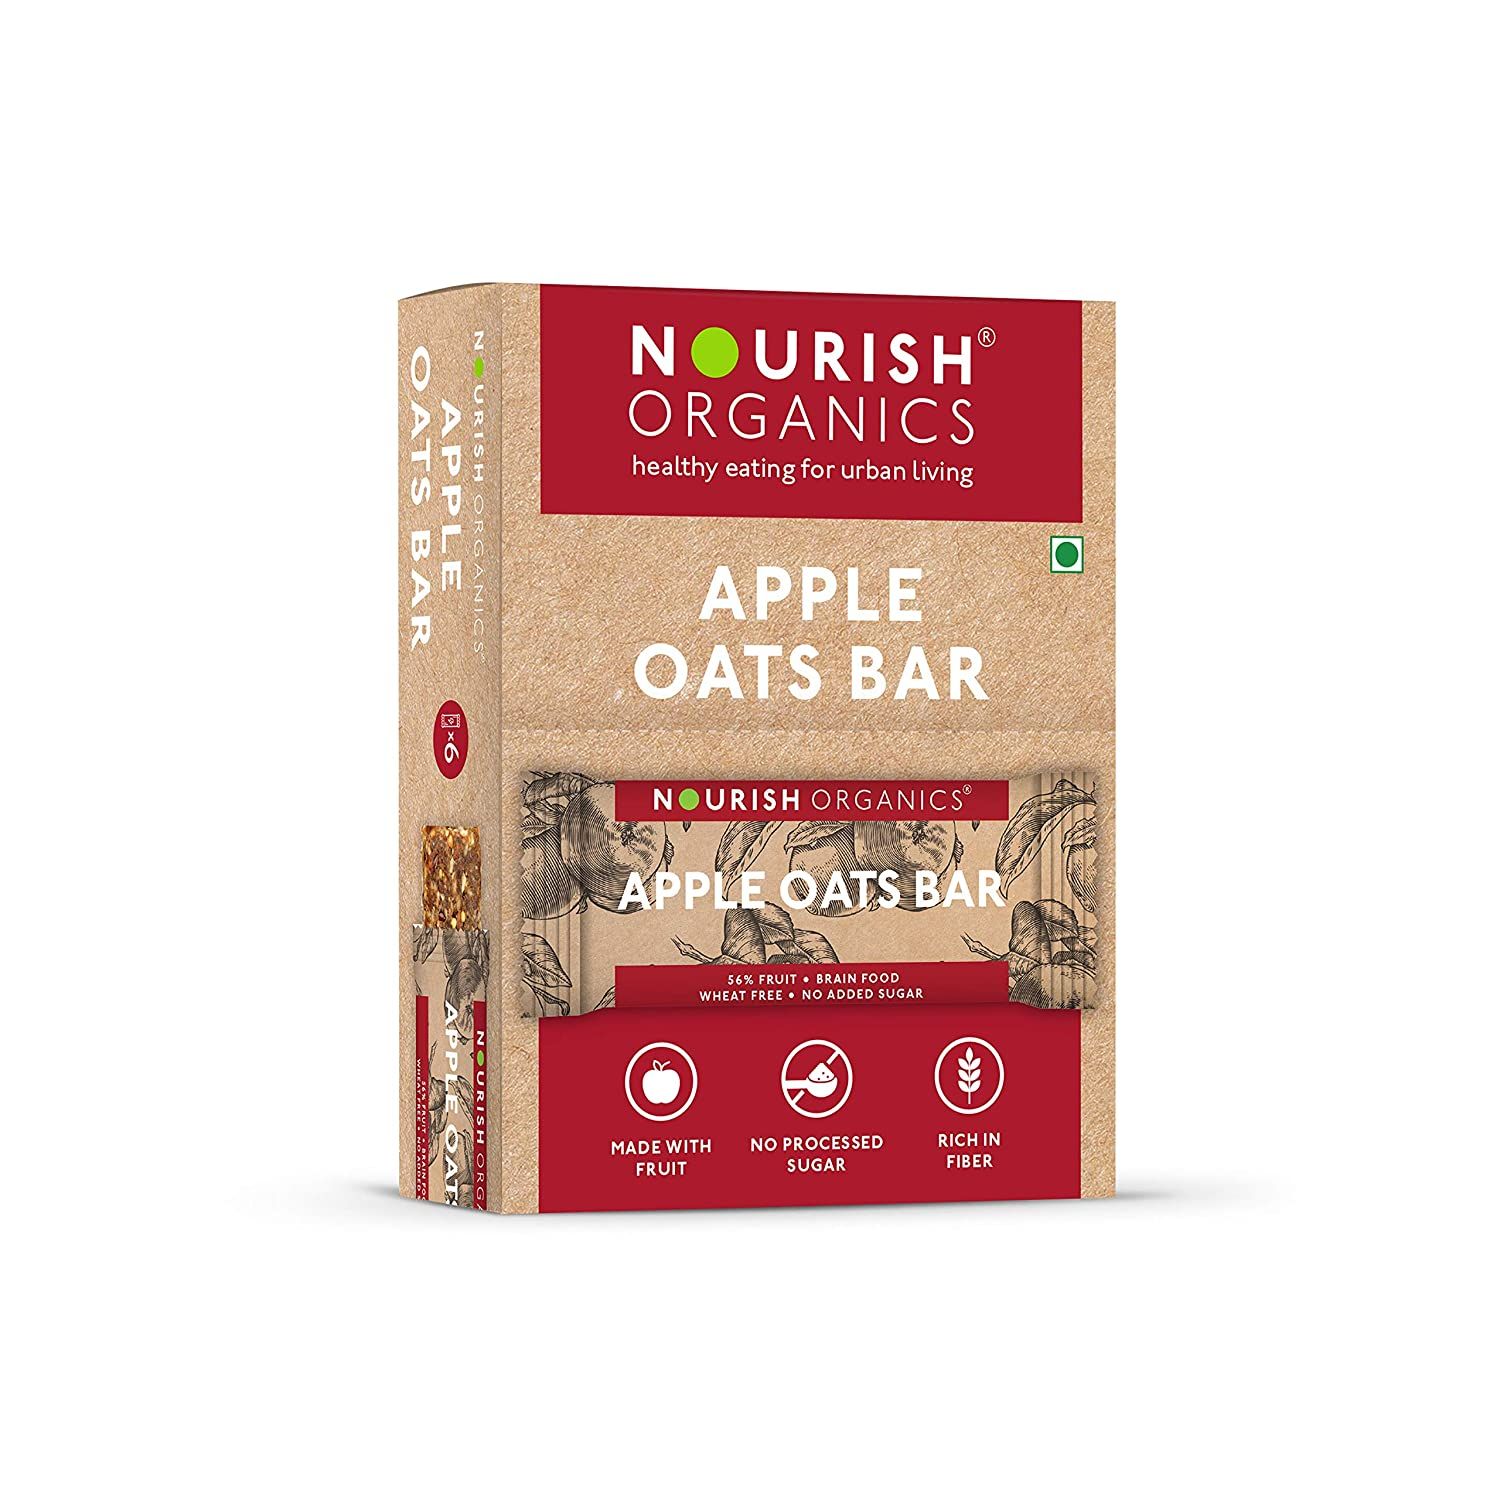 Nourish Organics Apple Oats Bar Image